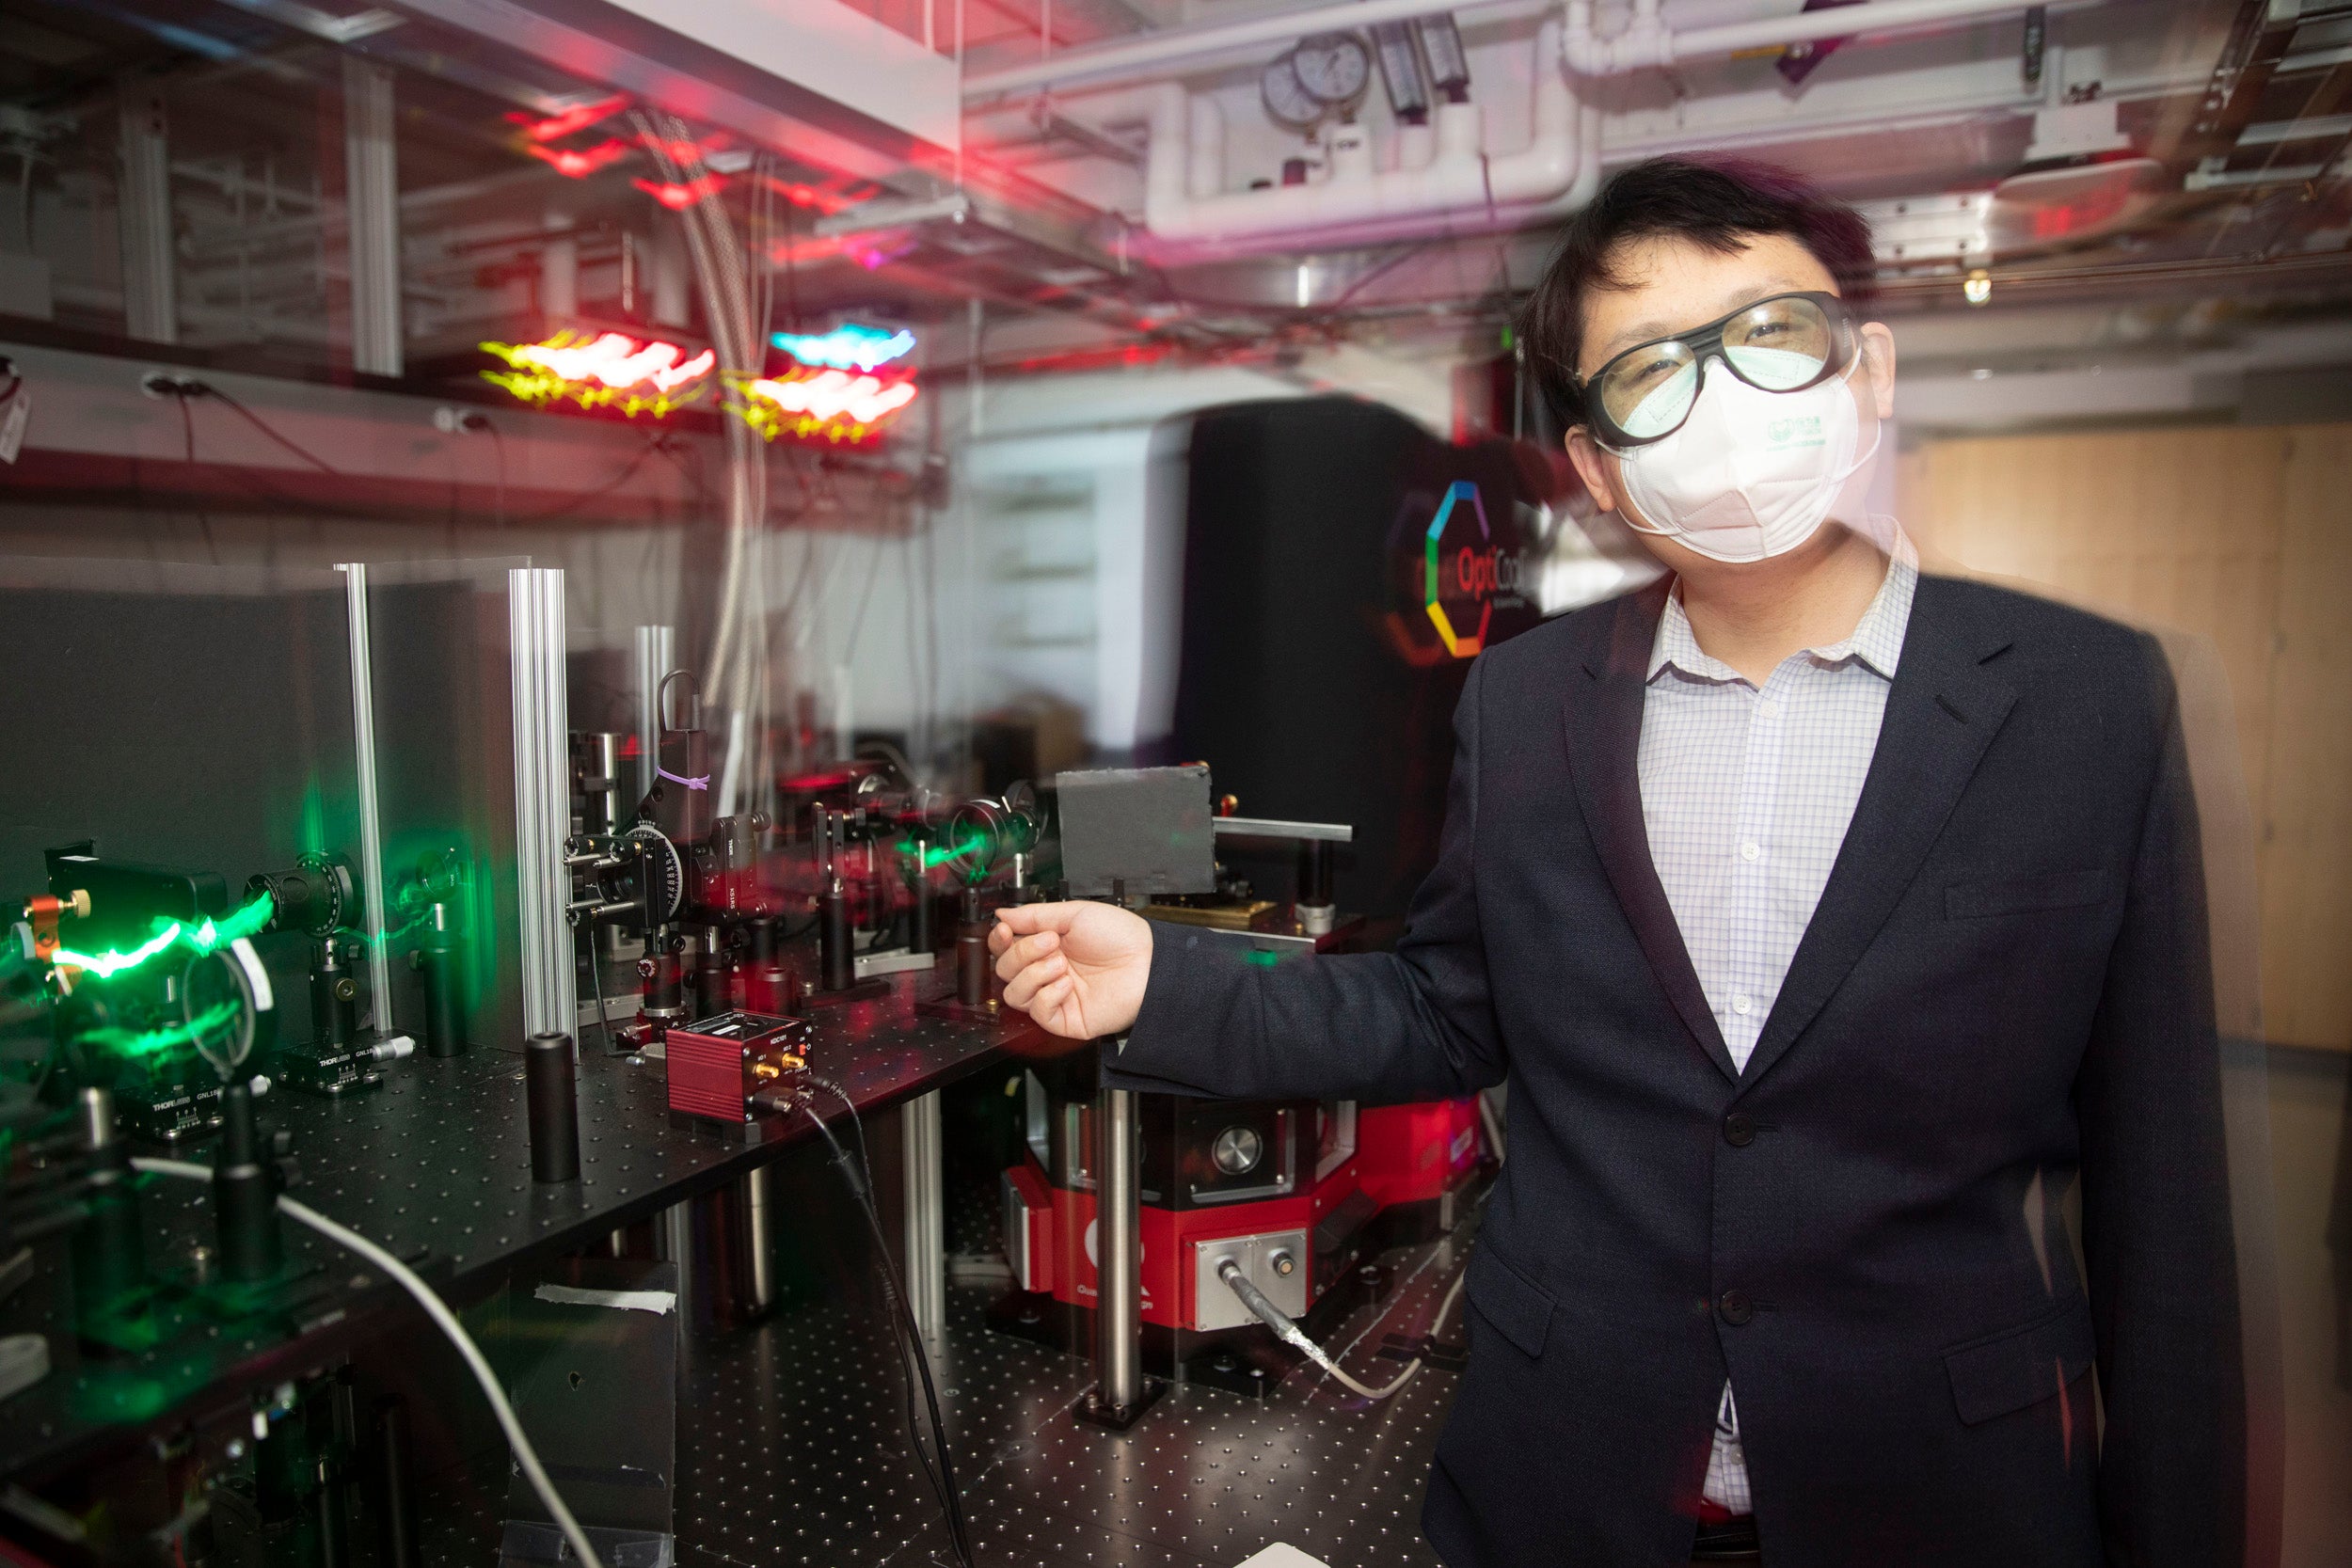 Harvard researcher unlocks potential of quantum technologies